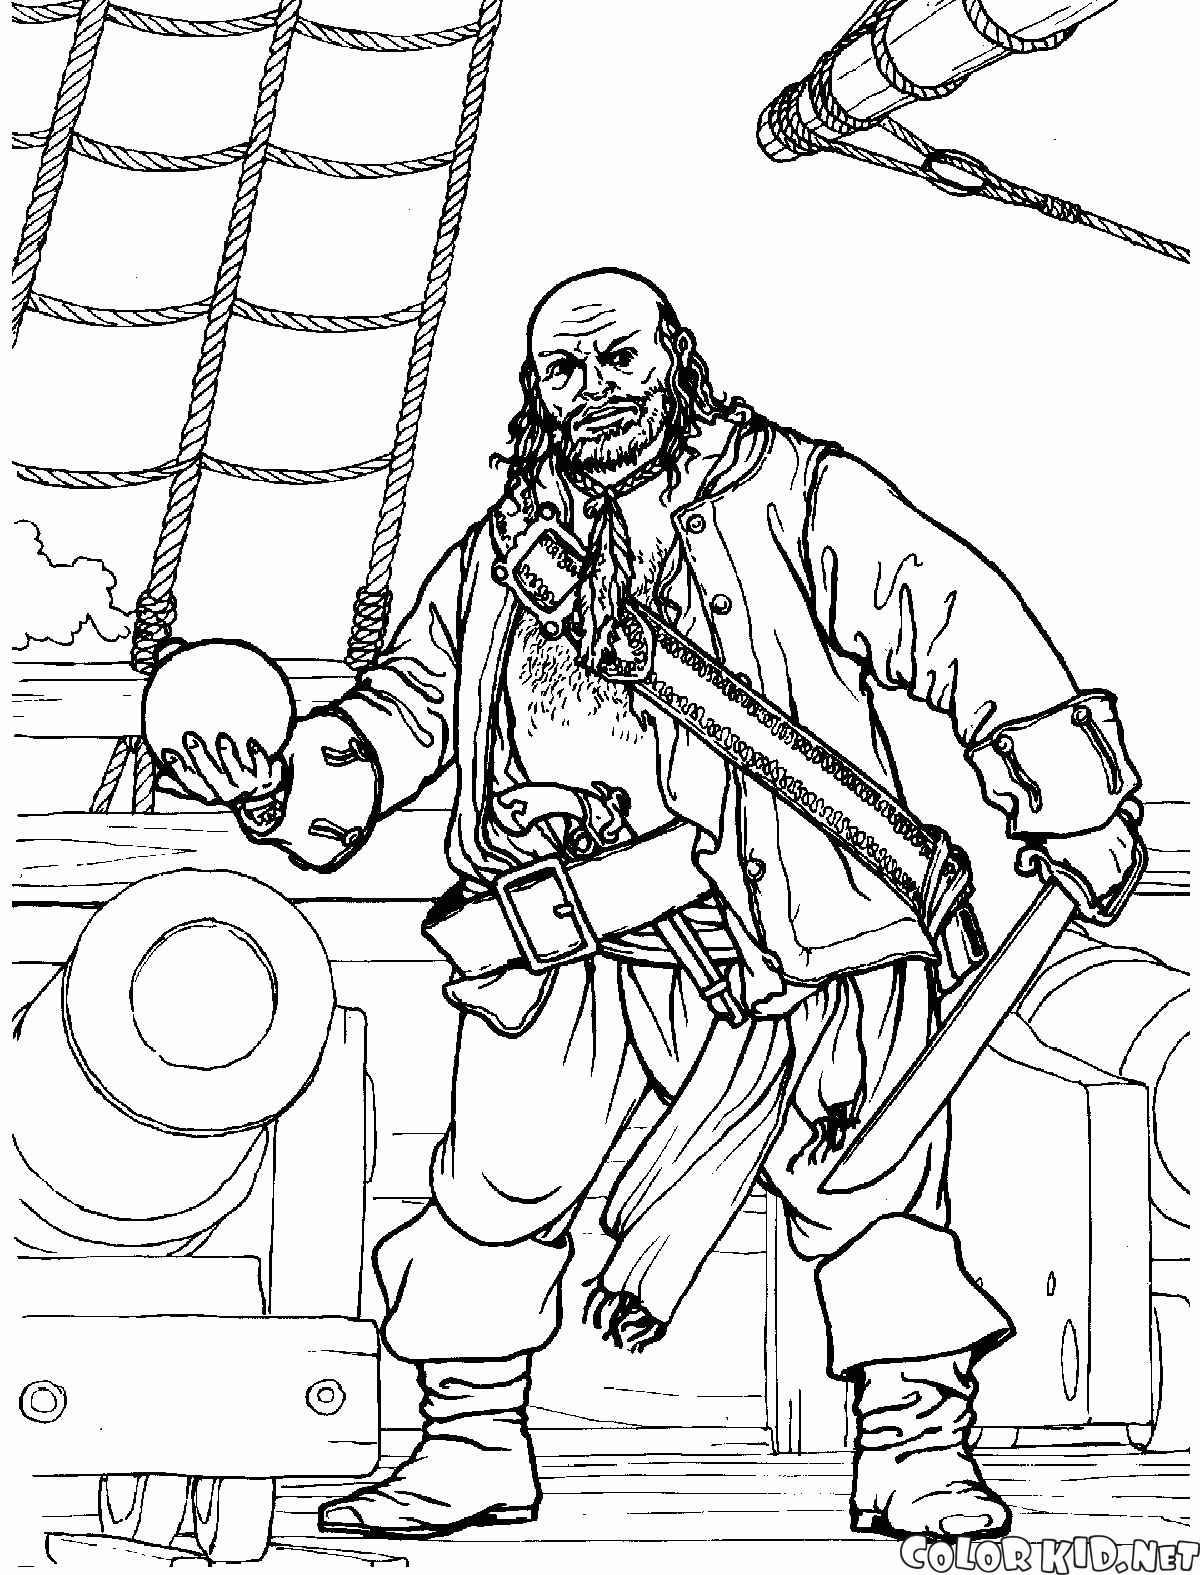 Pirate near the cannon